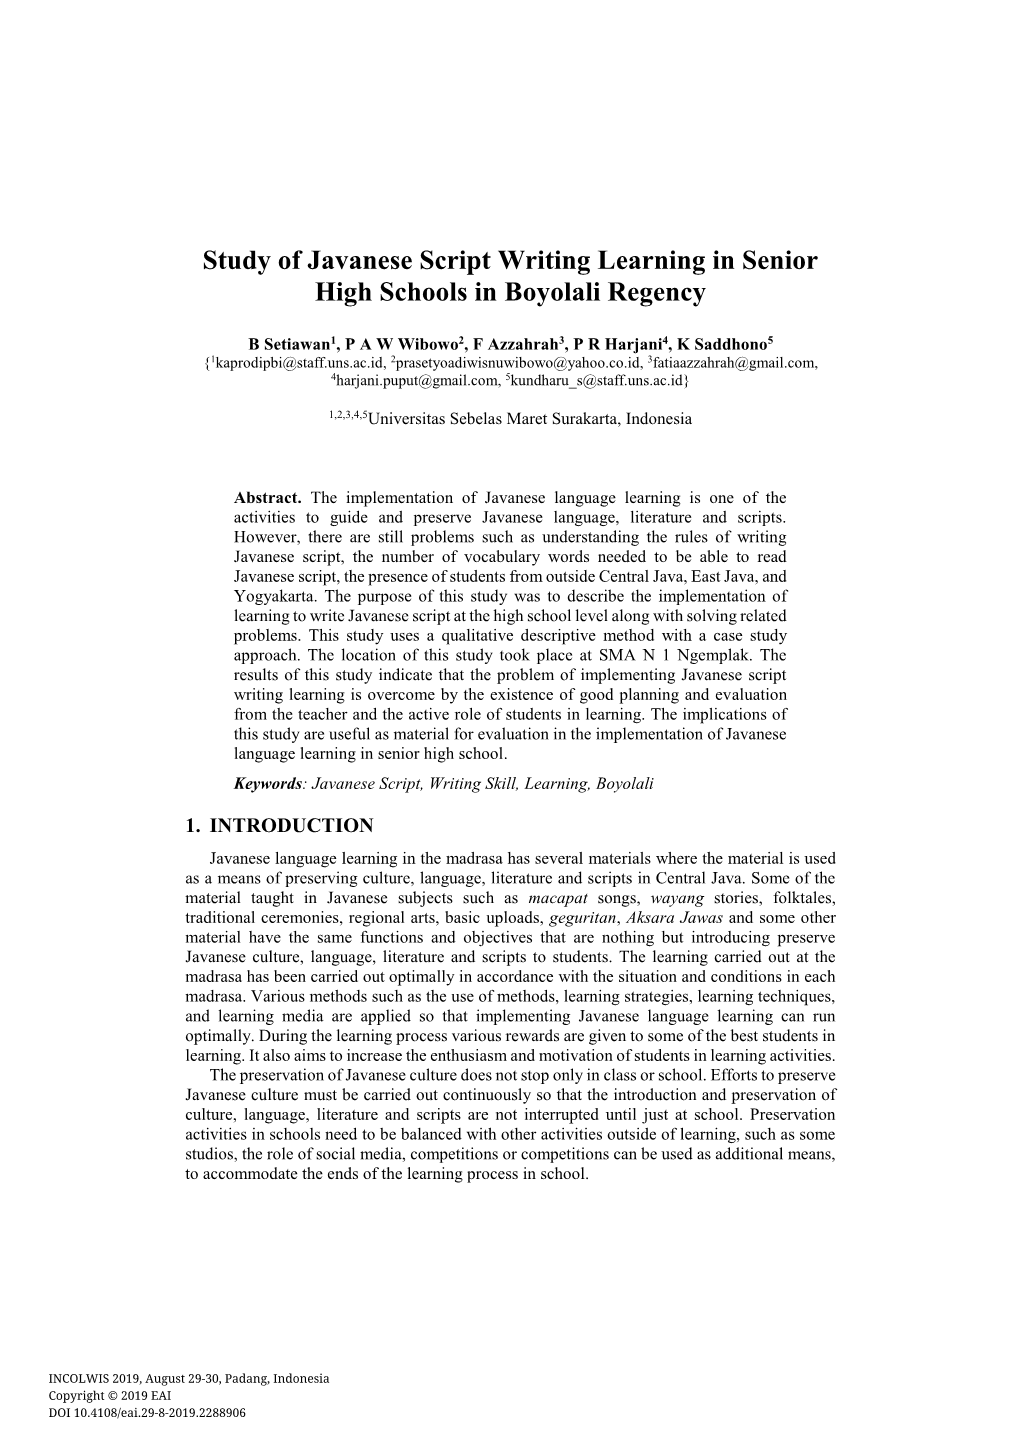 Study of Javanese Script Writing Learning in Senior High Schools in Boyolali Regency